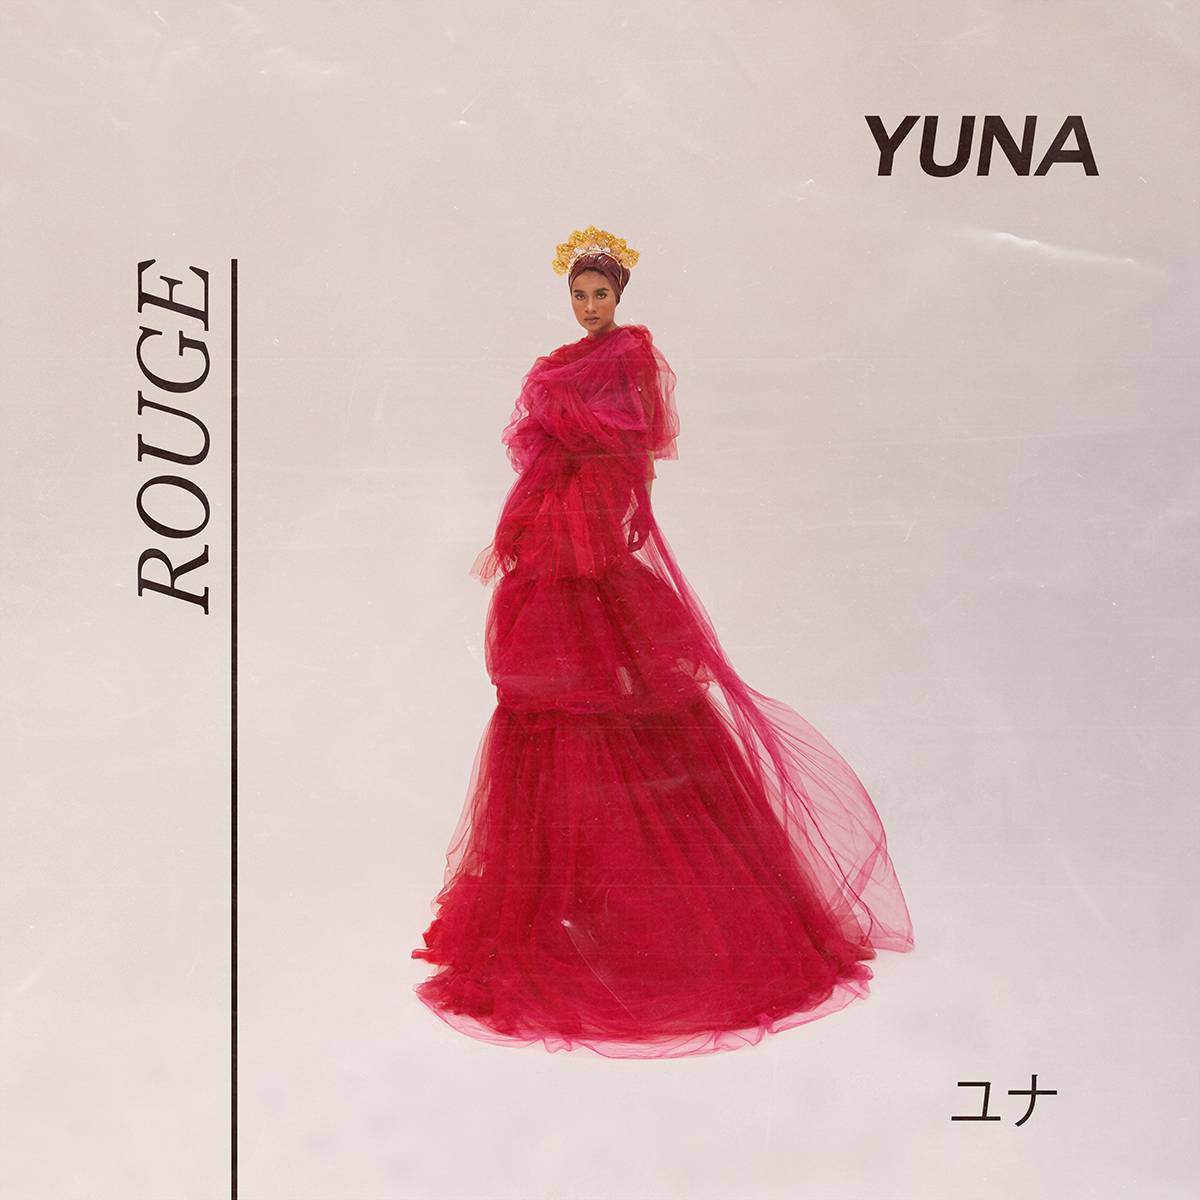 Yuna Rouge (Fot. Materiały prasowe)